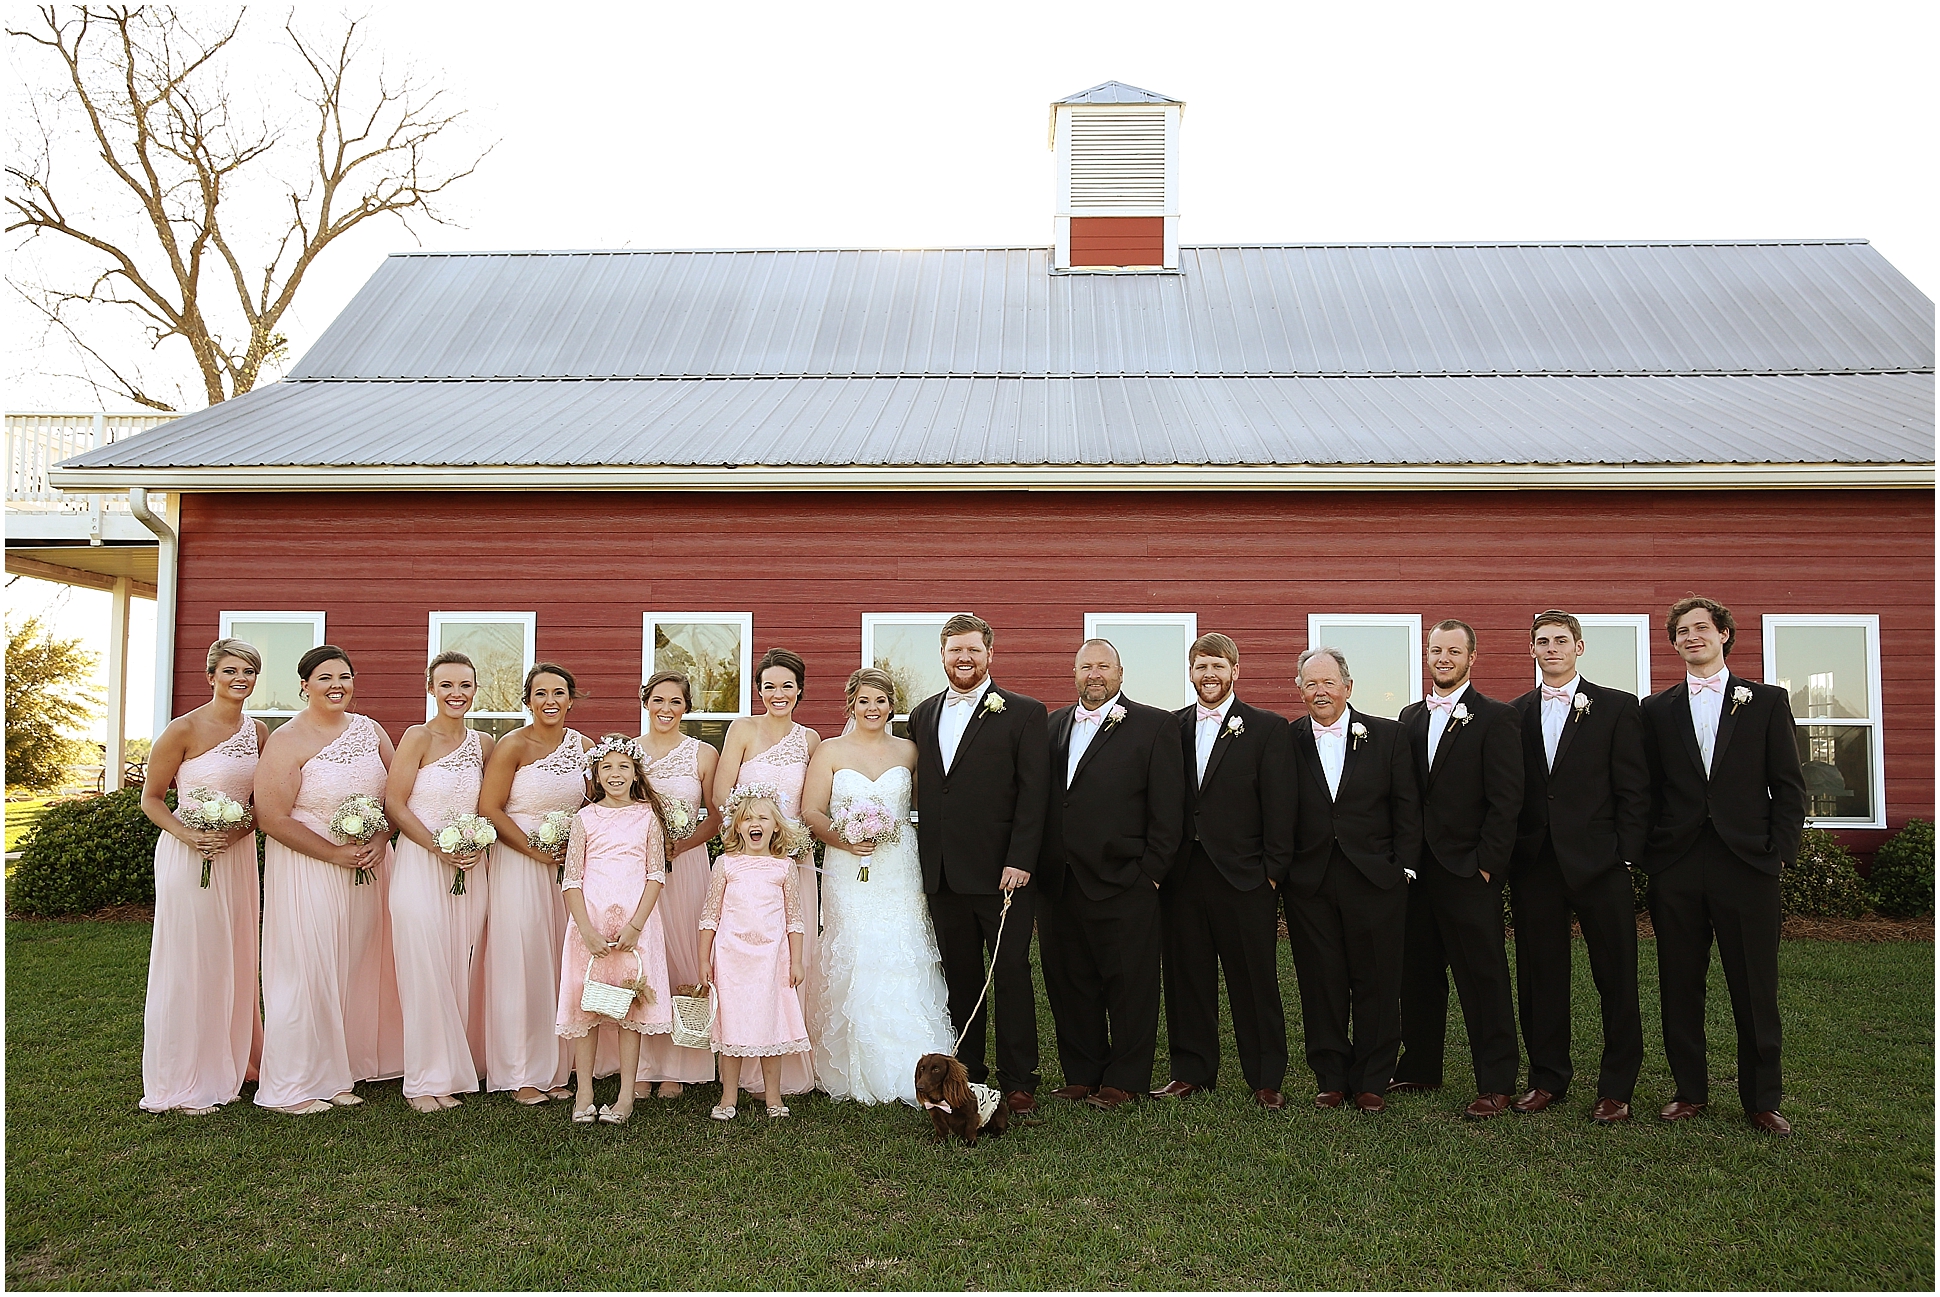 Twin Oaks Farm Wedding | Two Chics Photography | www.twochicsphotography.com